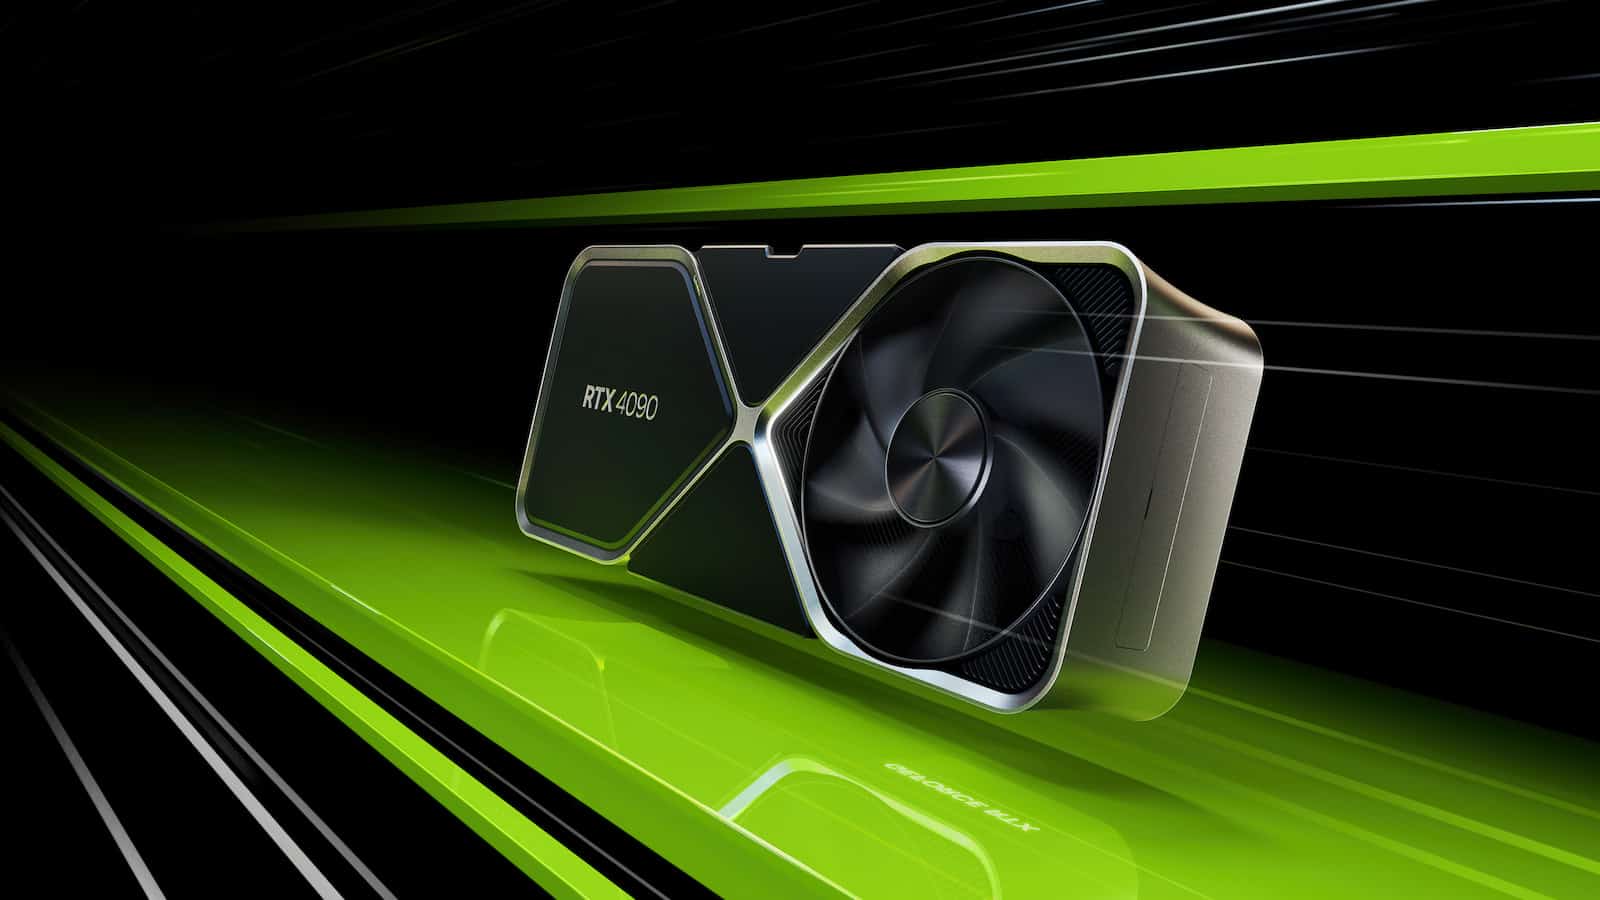 La GPU RTX 5090 de NVIDIA puede experimentar un gran impulso con respecto a la RTX 4090